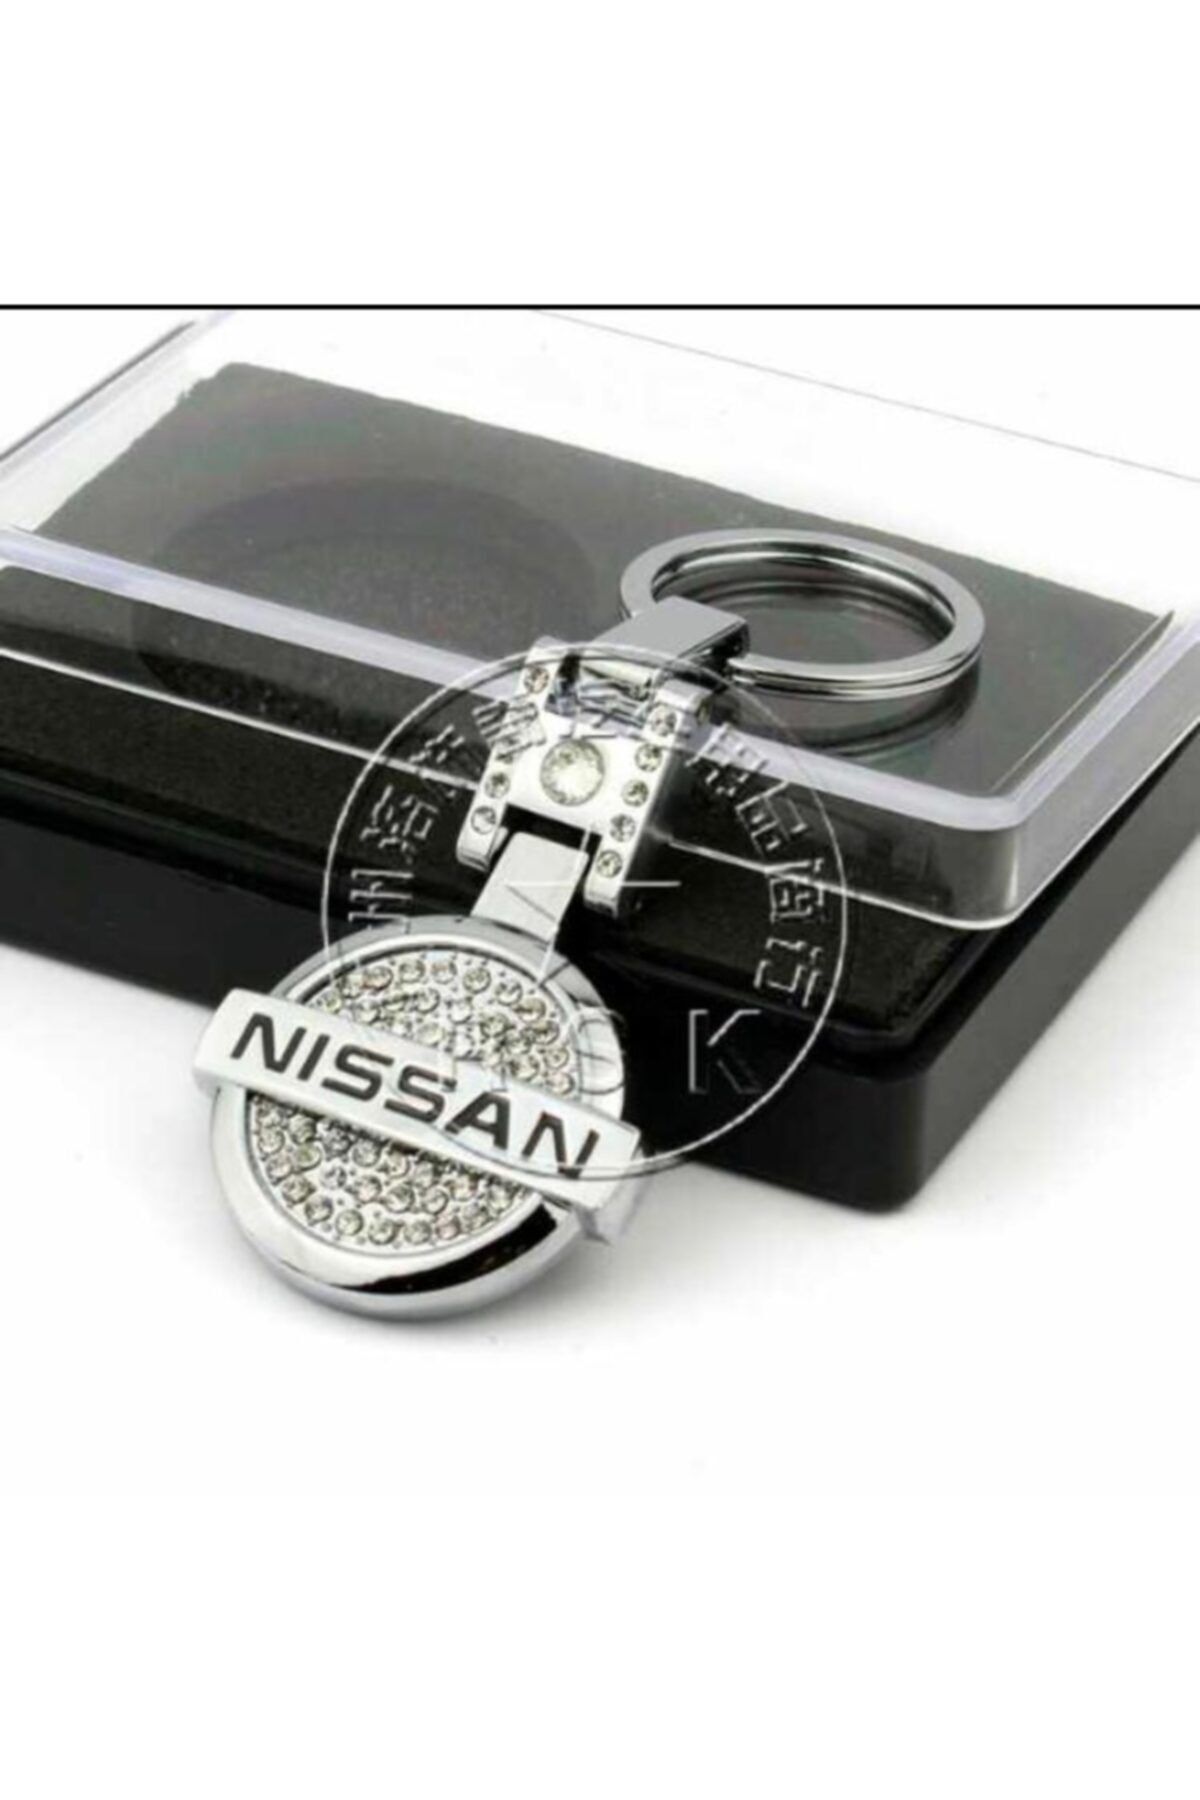 Azertaş oto aksesuar Nissan Taşlı Metal Anahtarlık 1. Kalite Şık Taşlı Dizayn Aksesuar